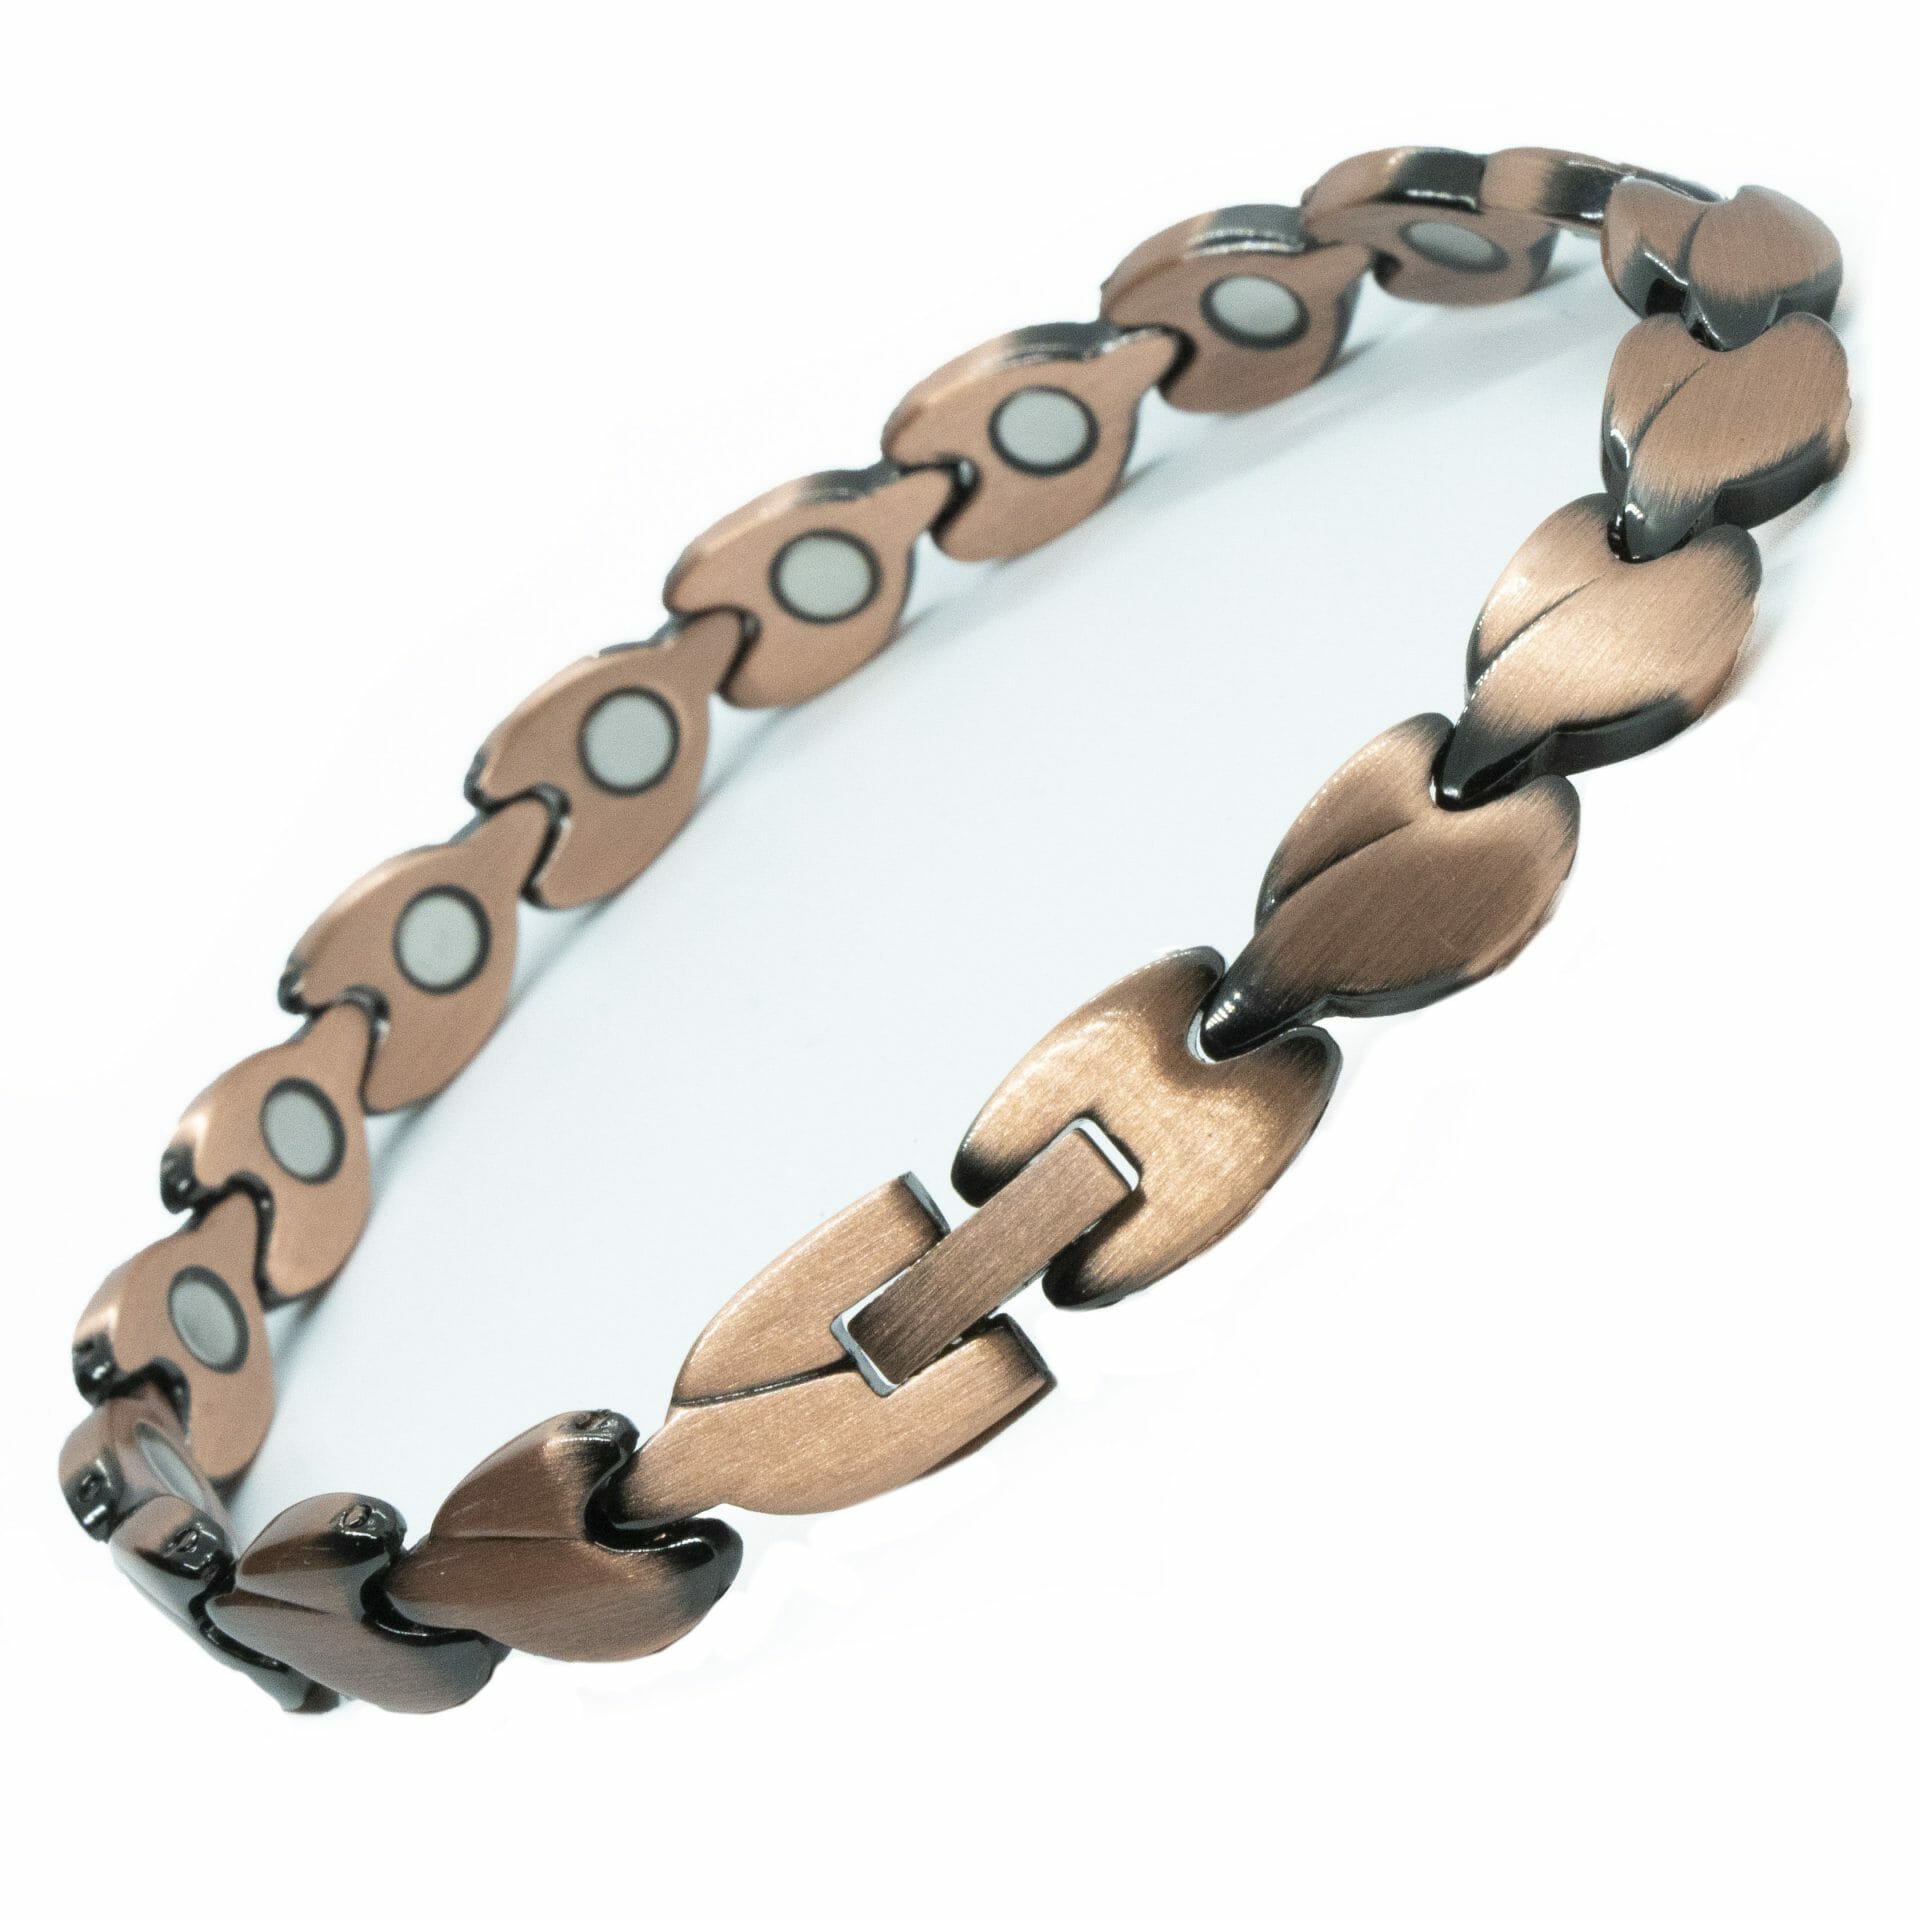 Hearts women's magnet bracelet made of copper